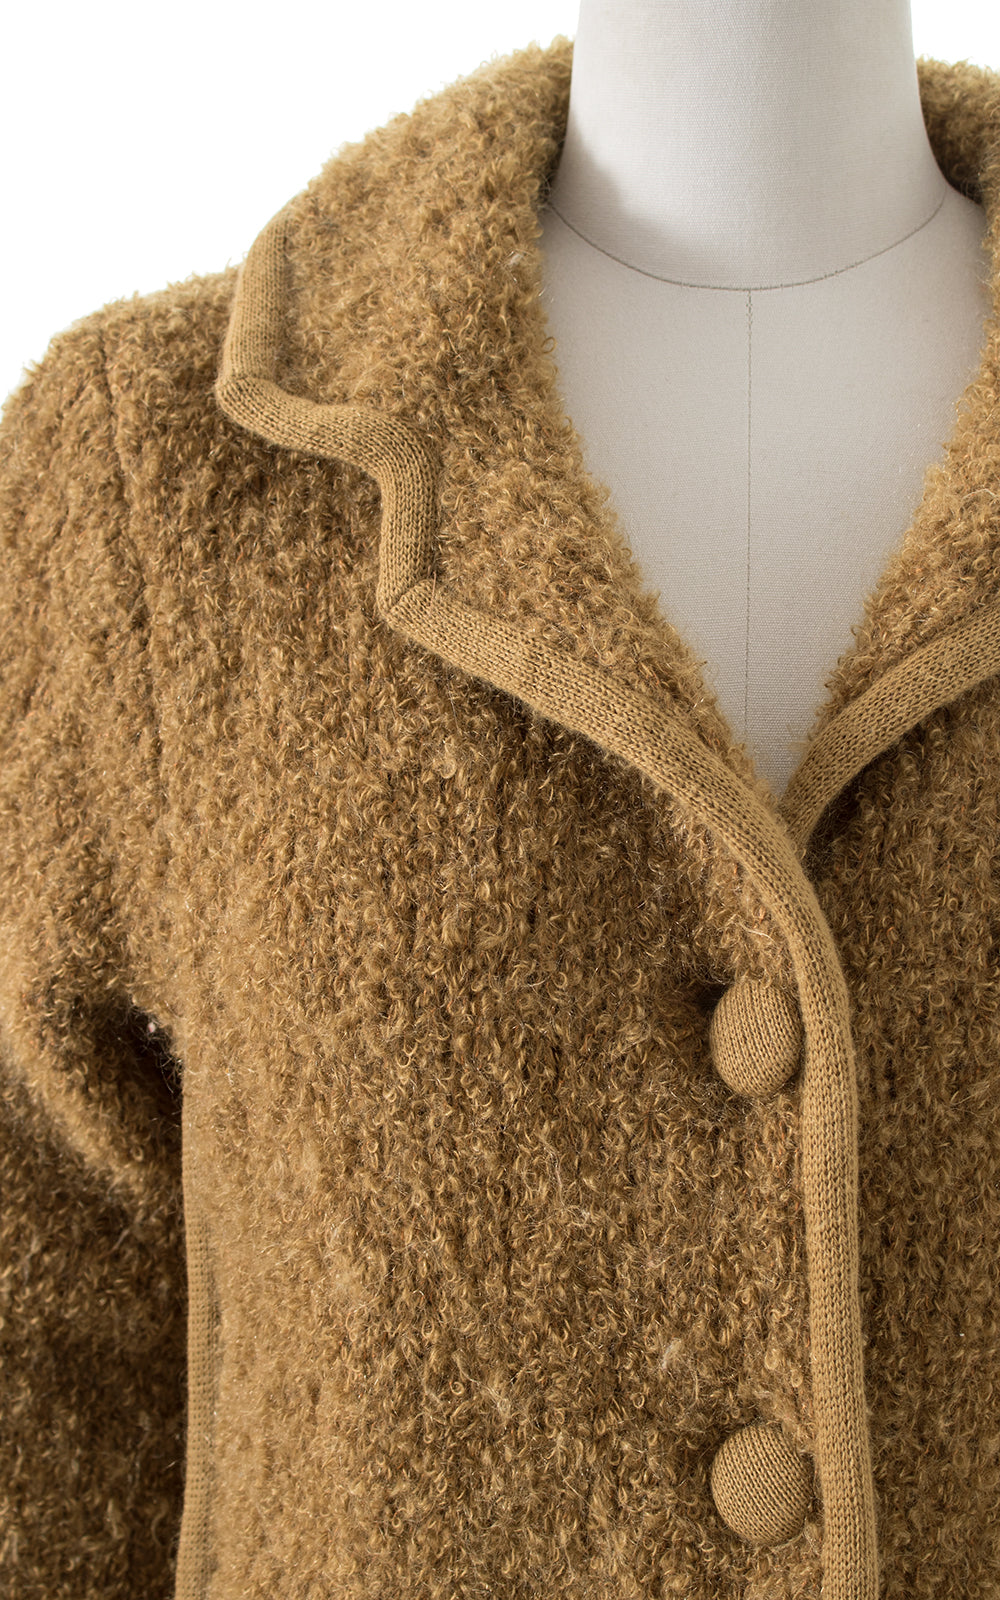 1960s Camel Bouclé Wool Sweater Coat